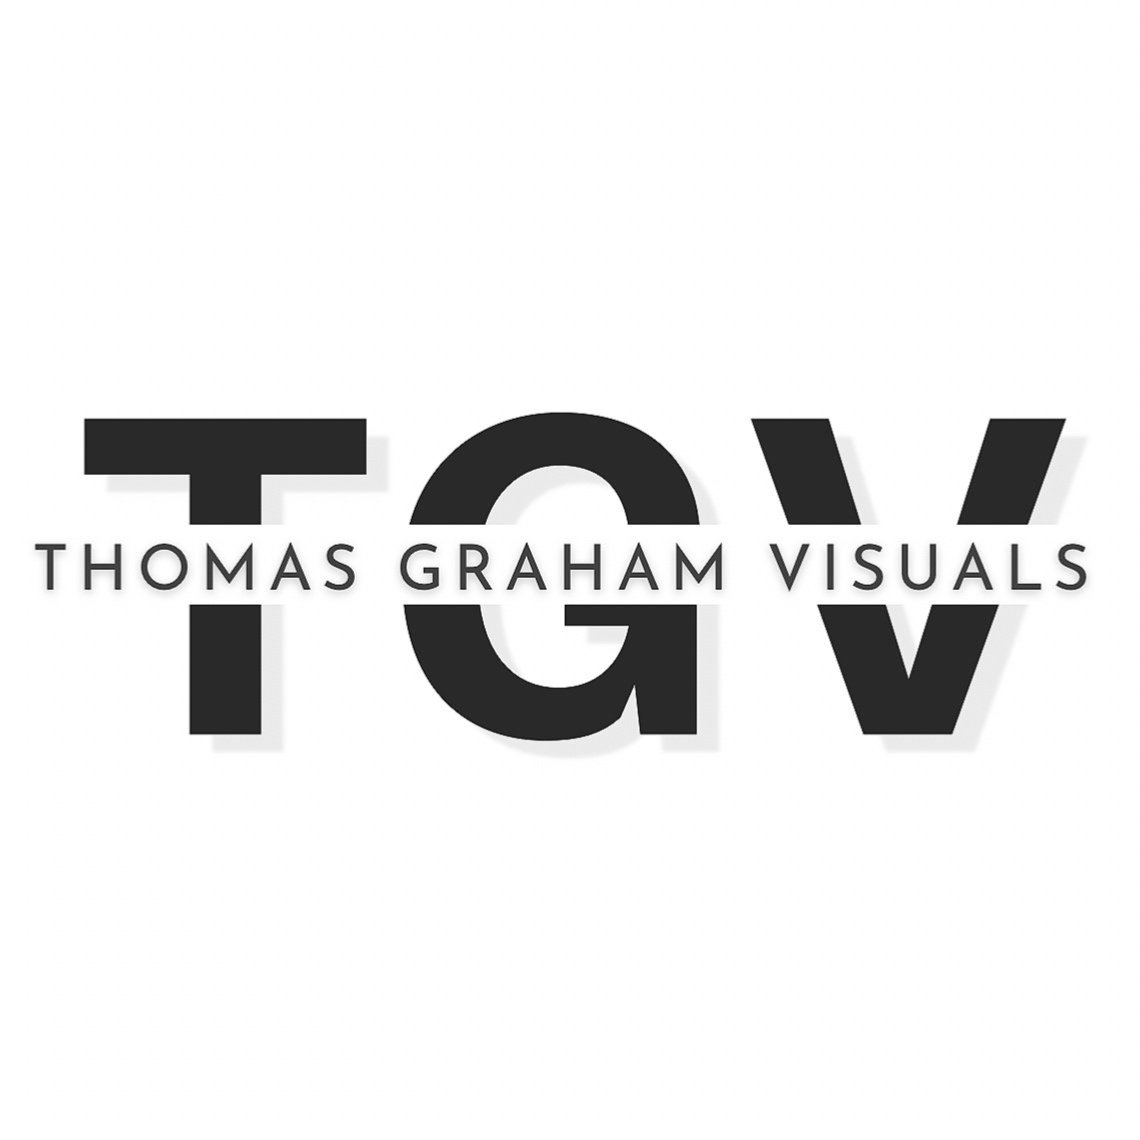 Thomas Graham Visuals